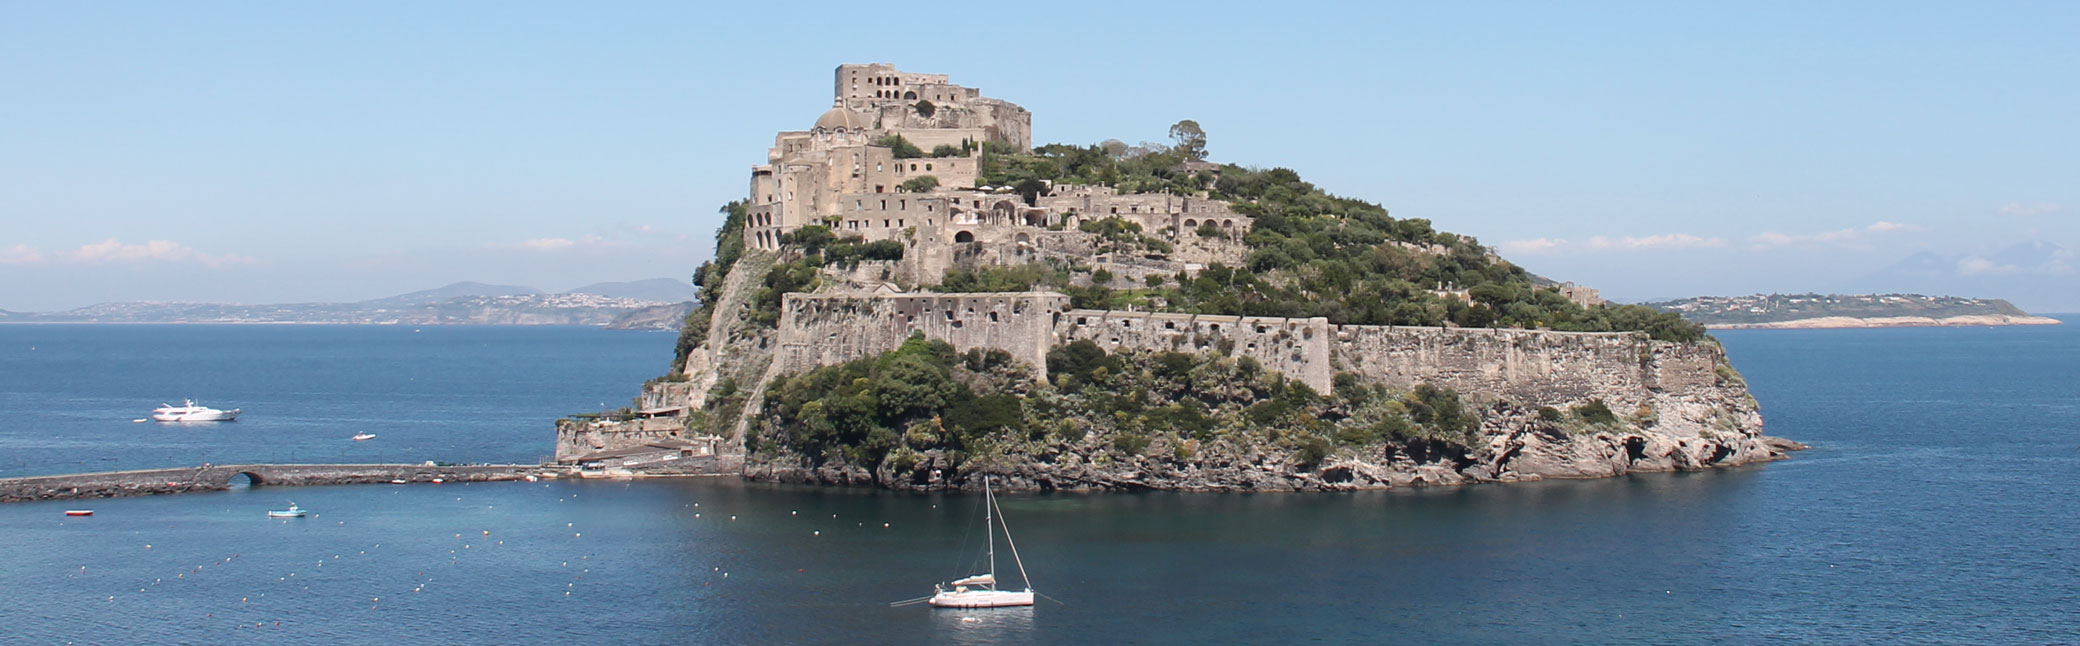 Il Castello Aragonese sull'isola d'Ischia